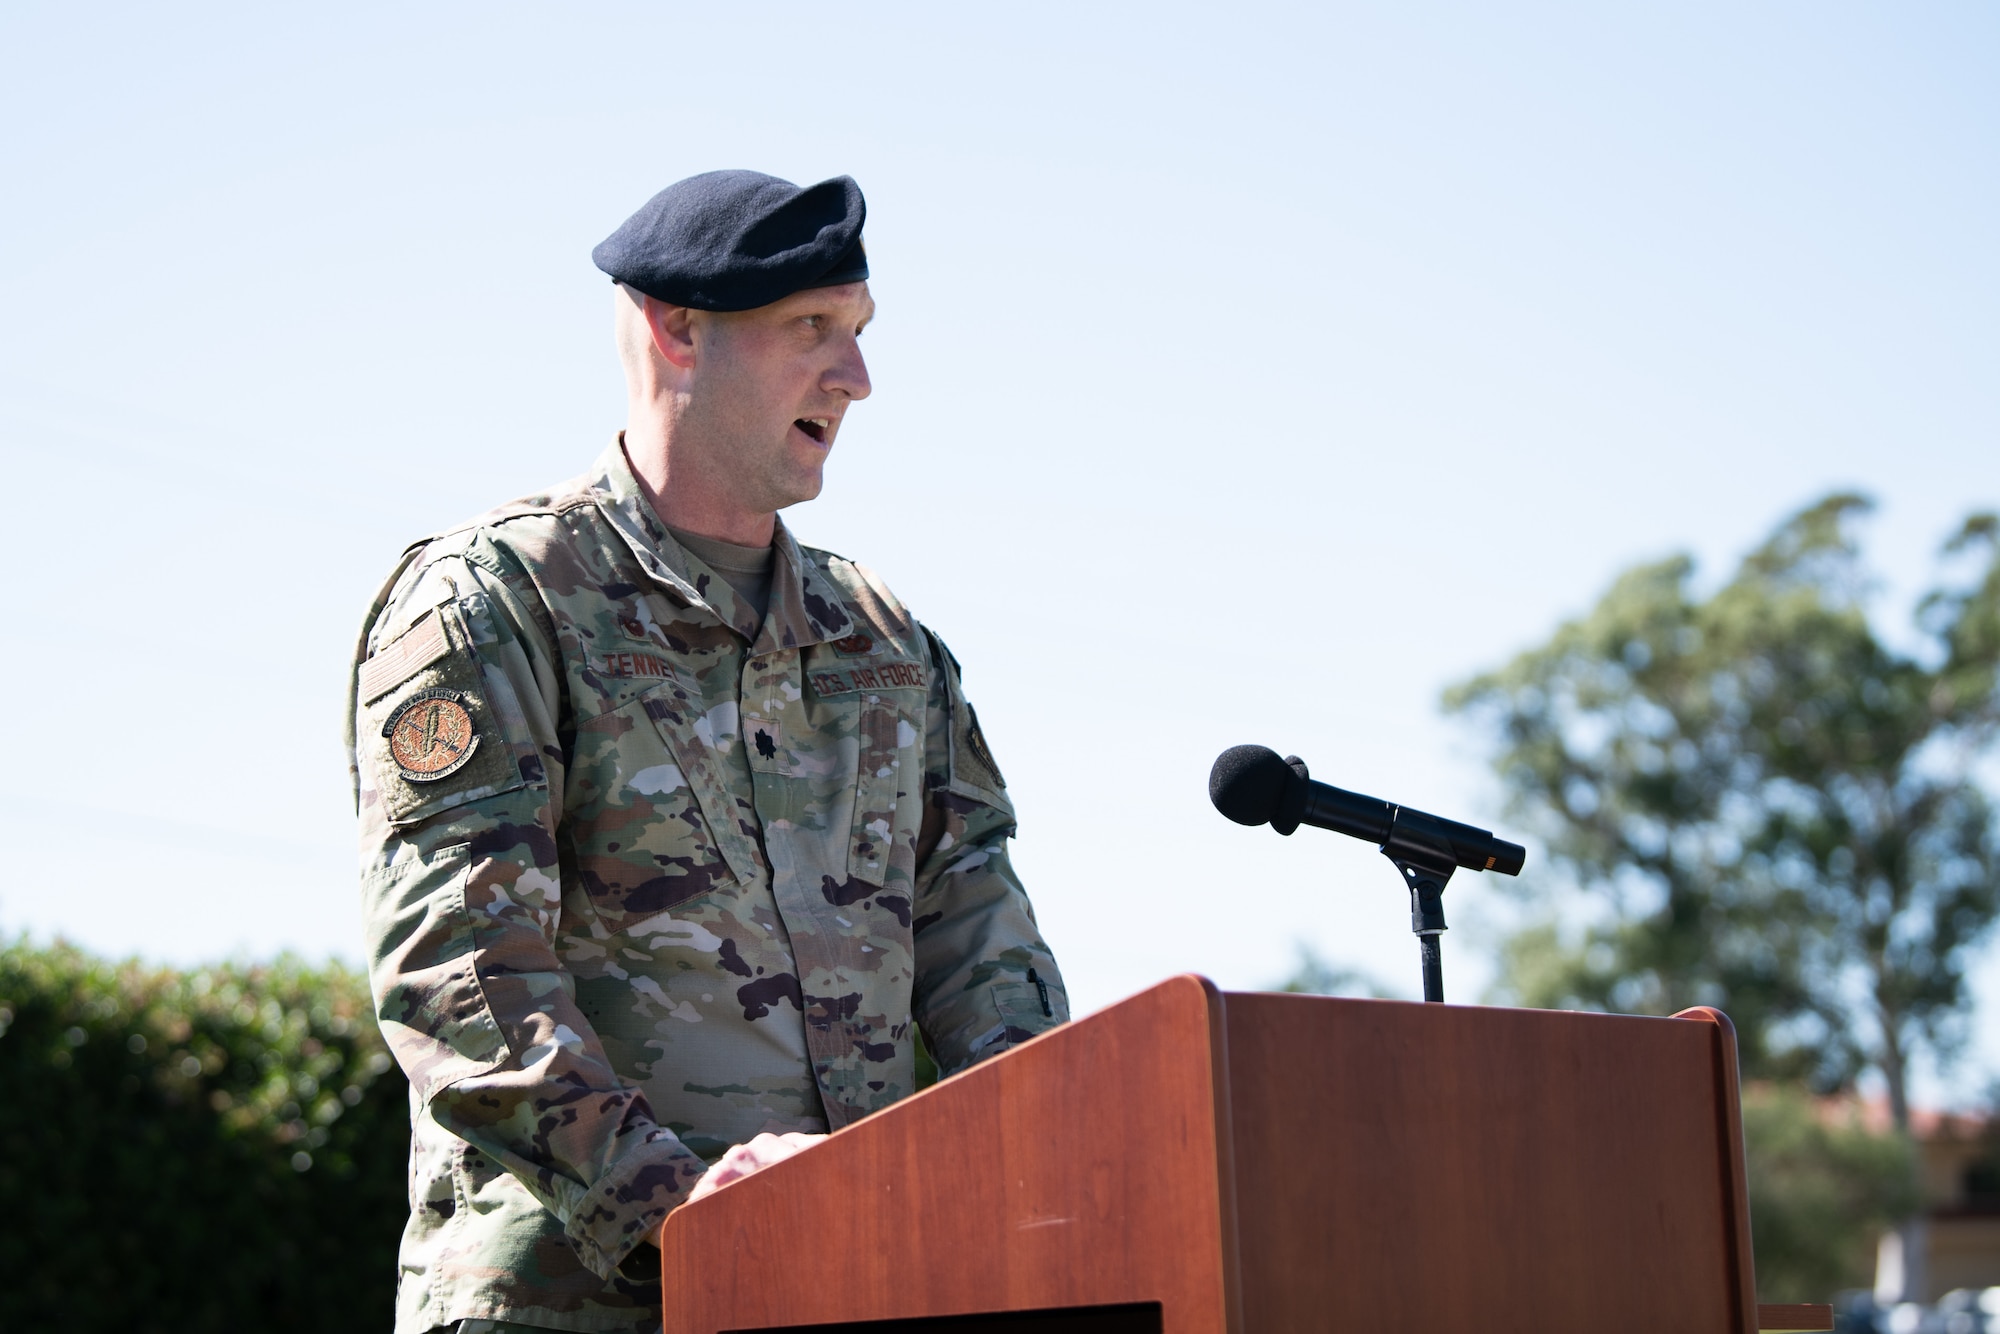 commander giving speech